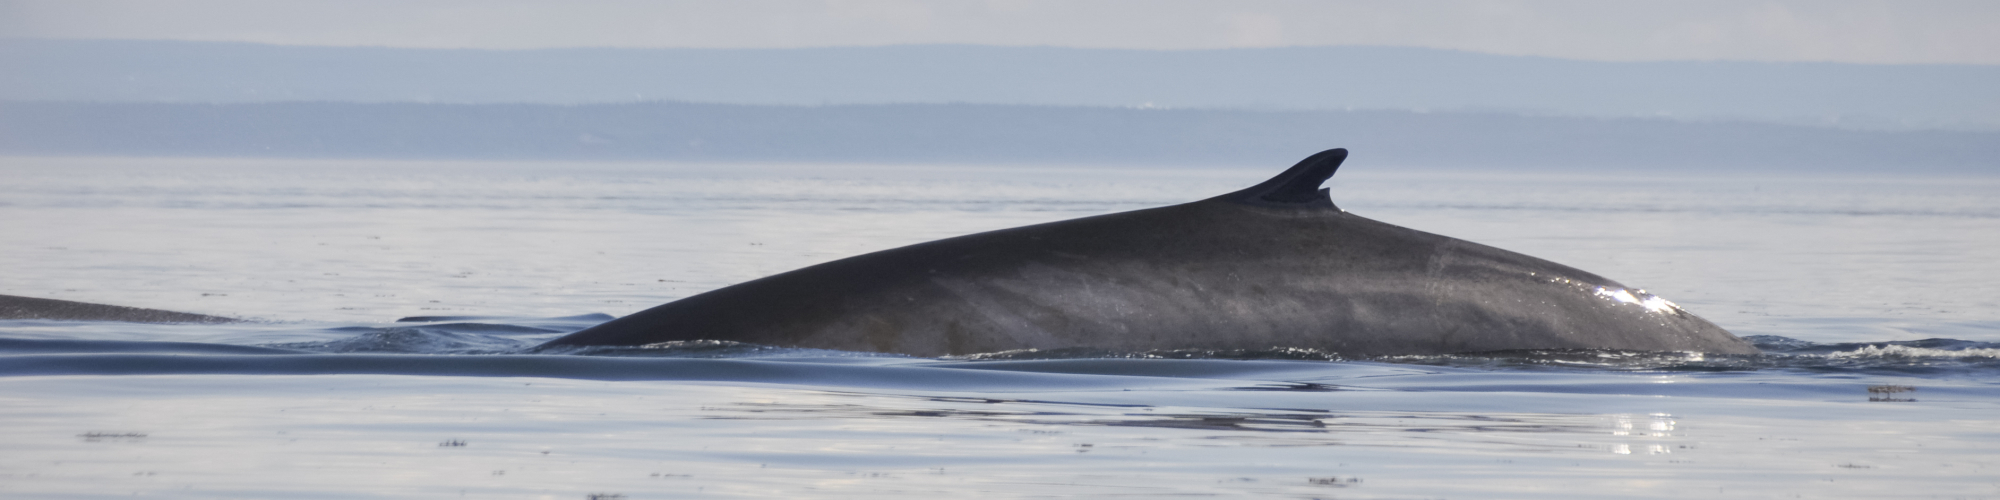 Whale, cruise, Gaspé Peninsula